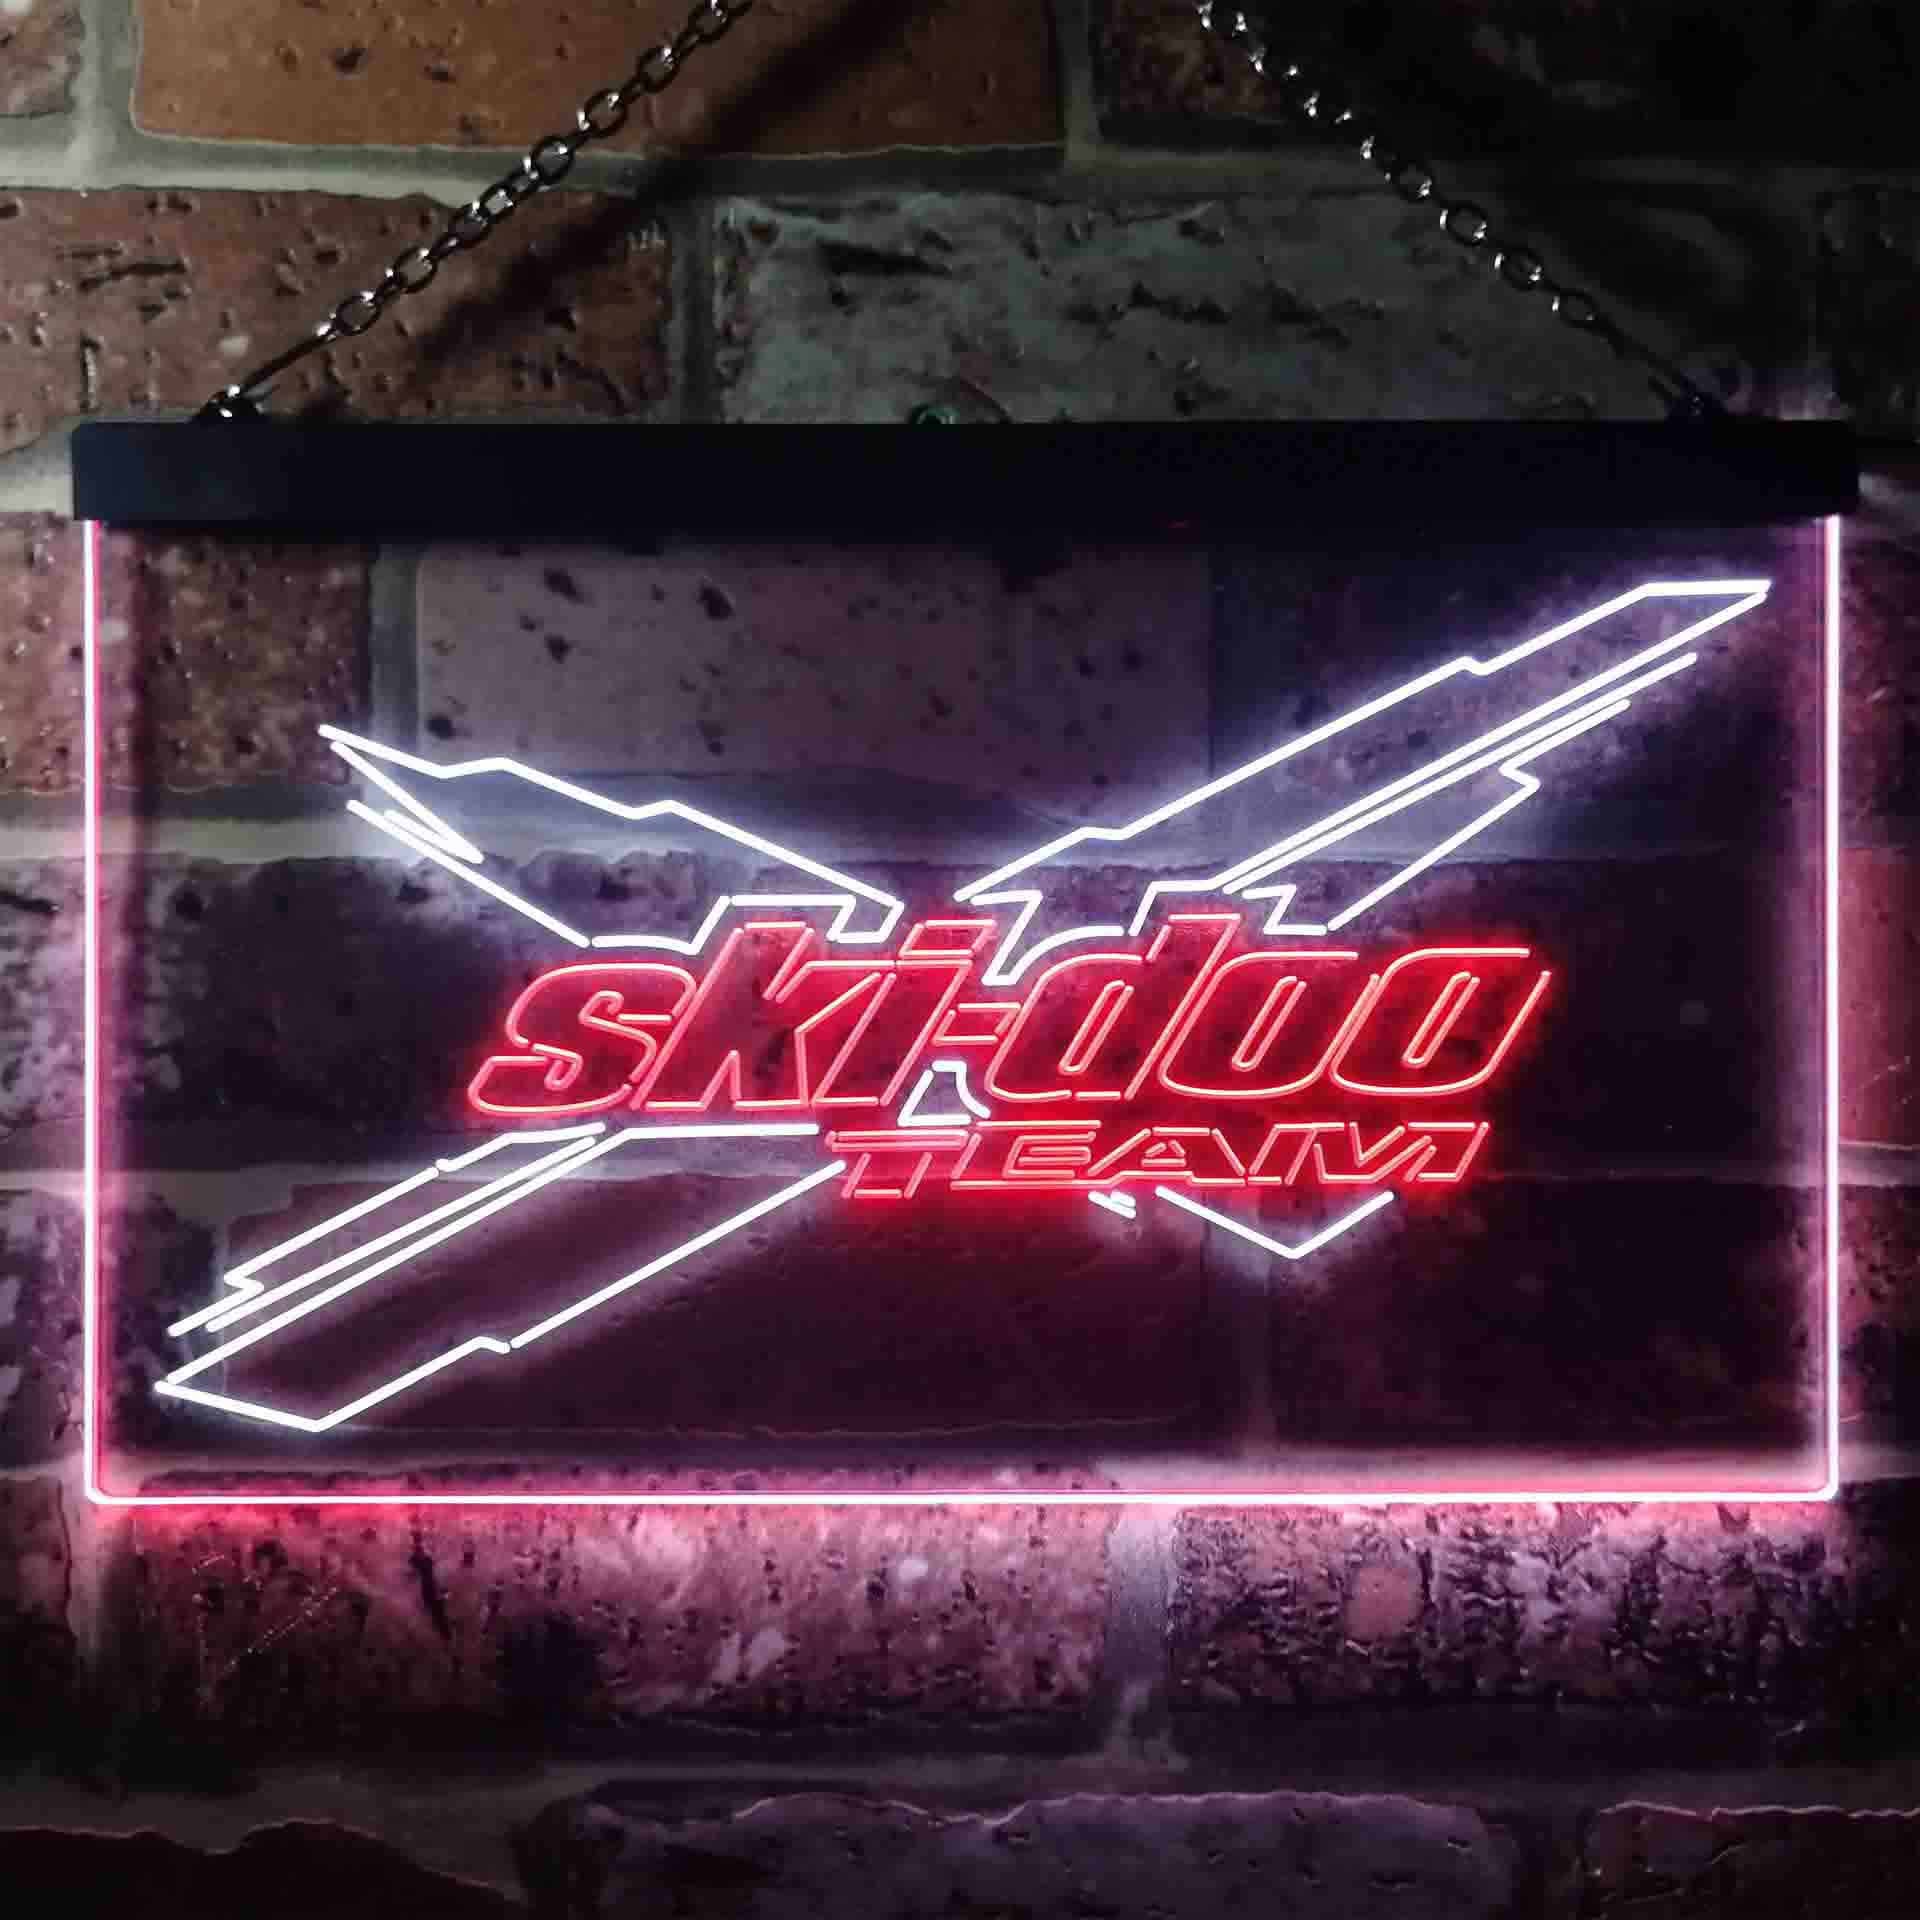 Ski-doo LED Neon Sign